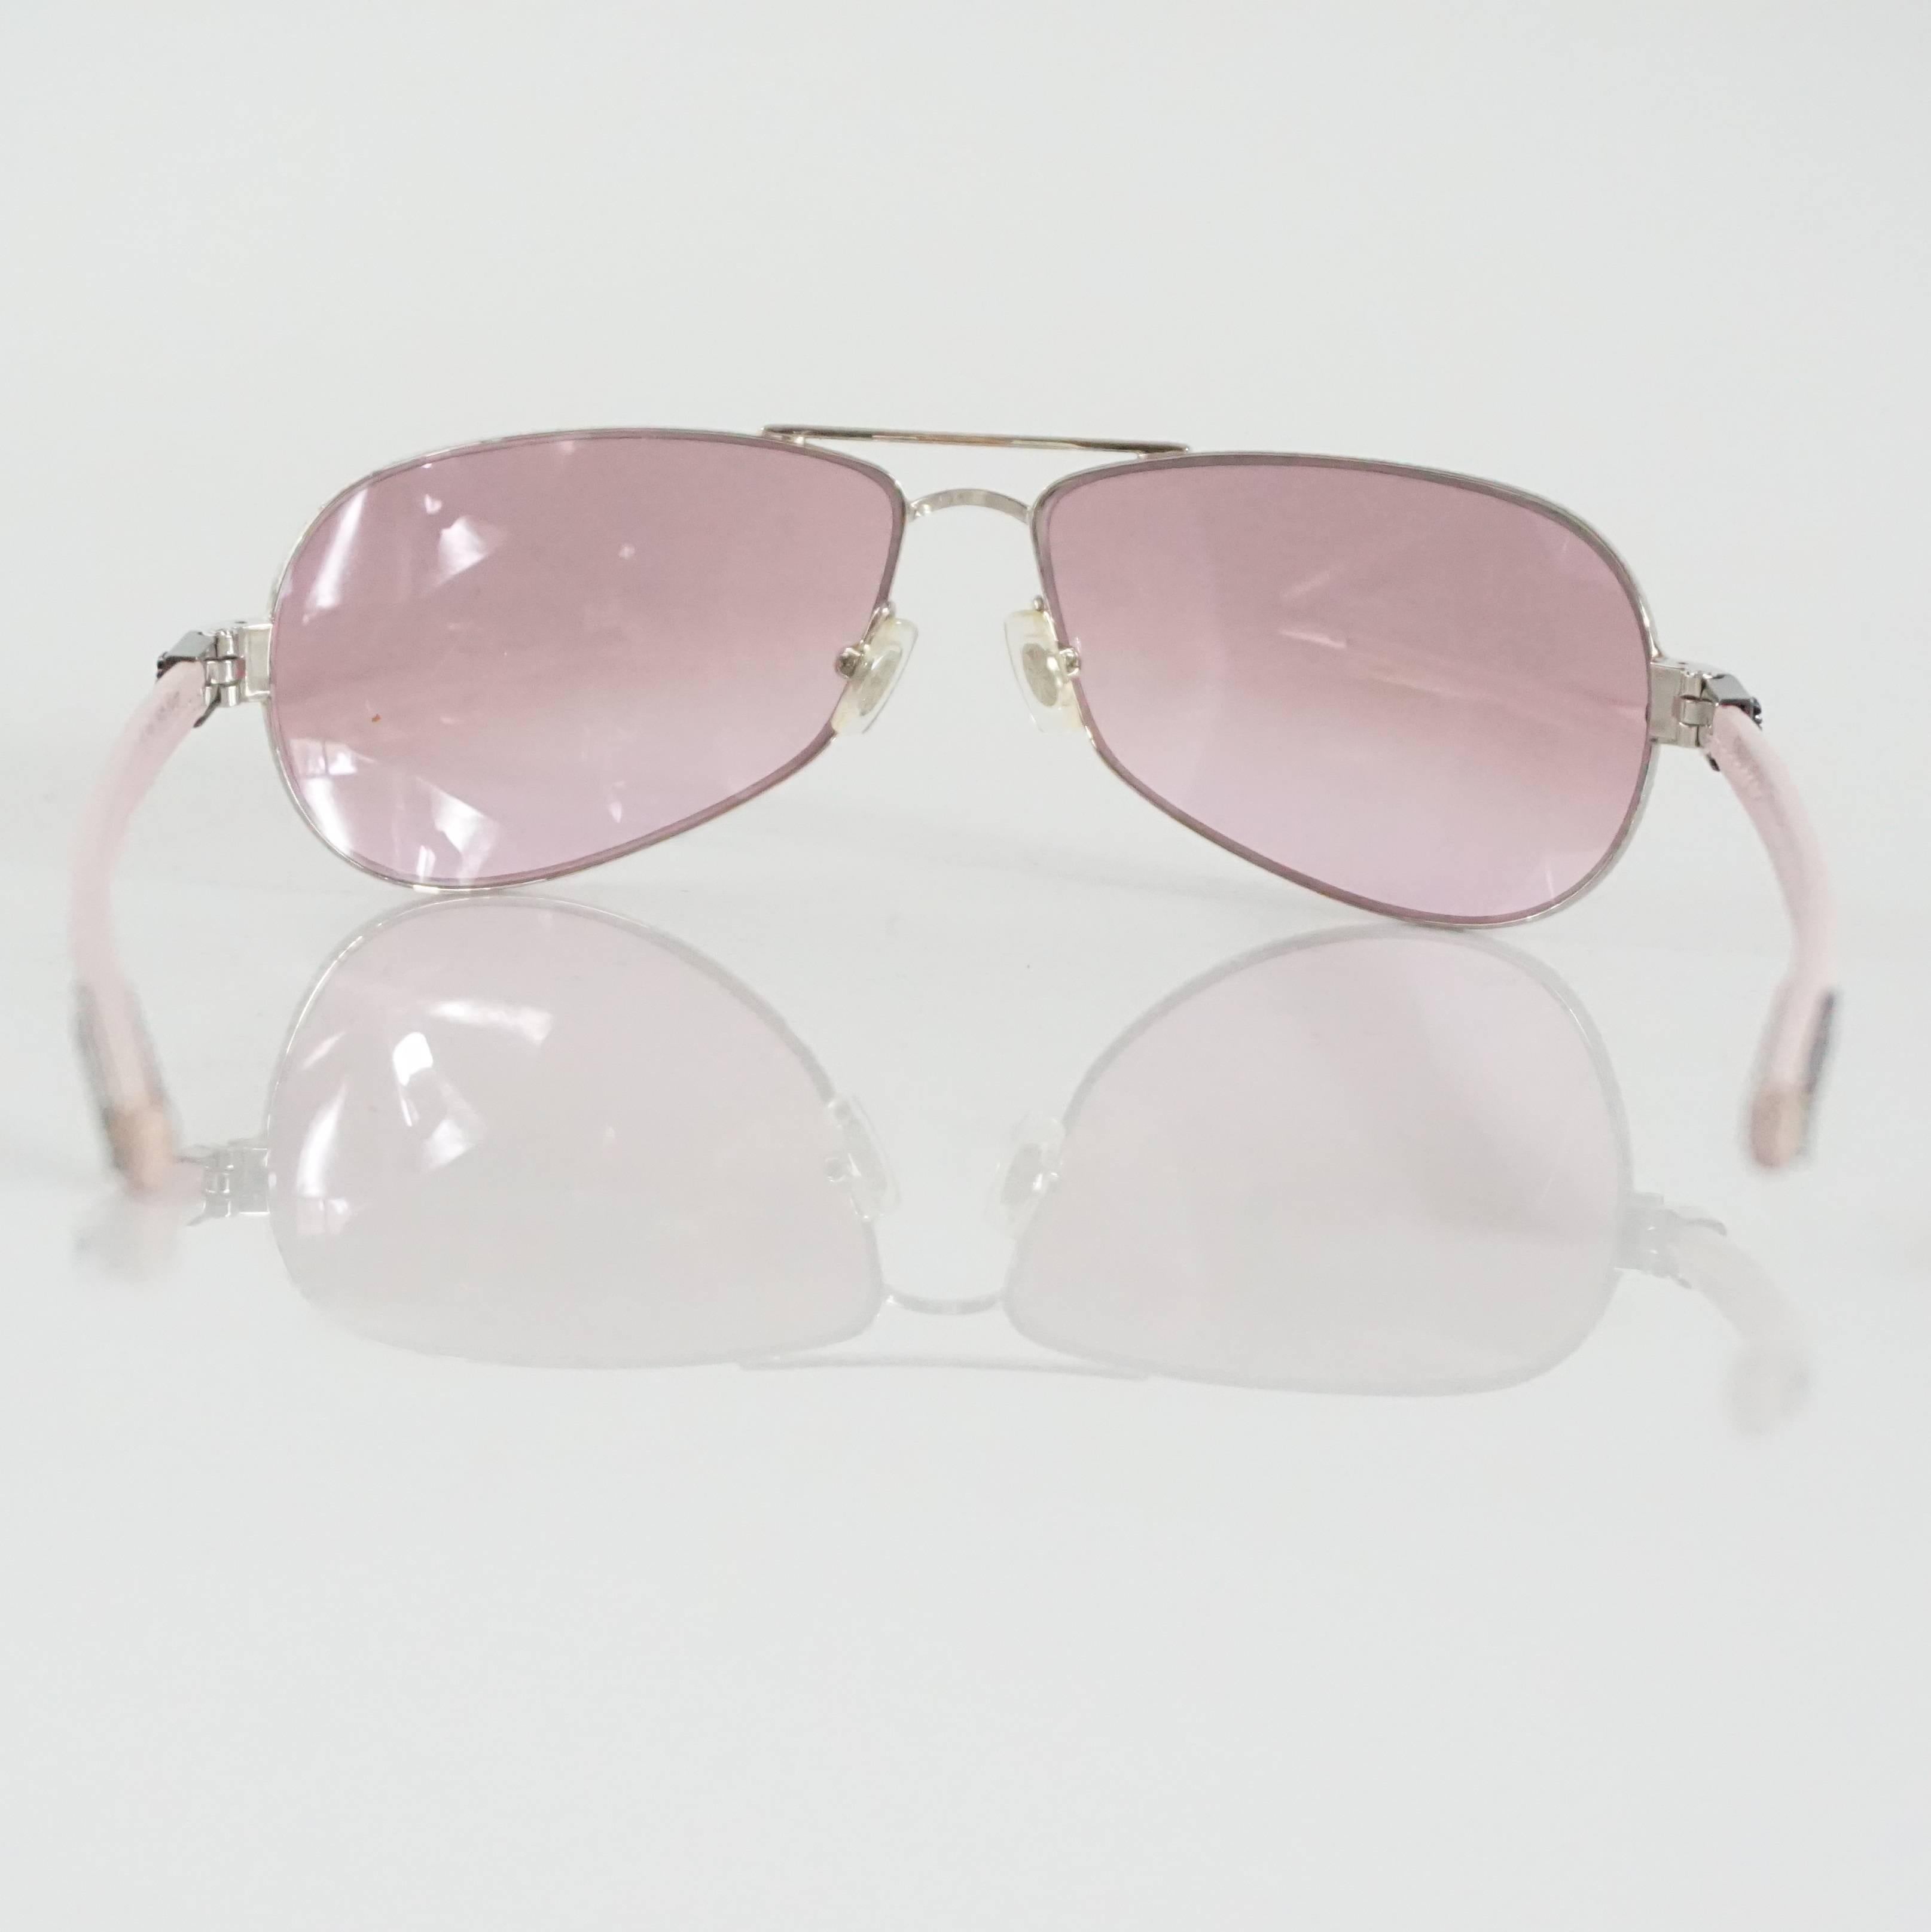 chrome hearts sunglasses pink